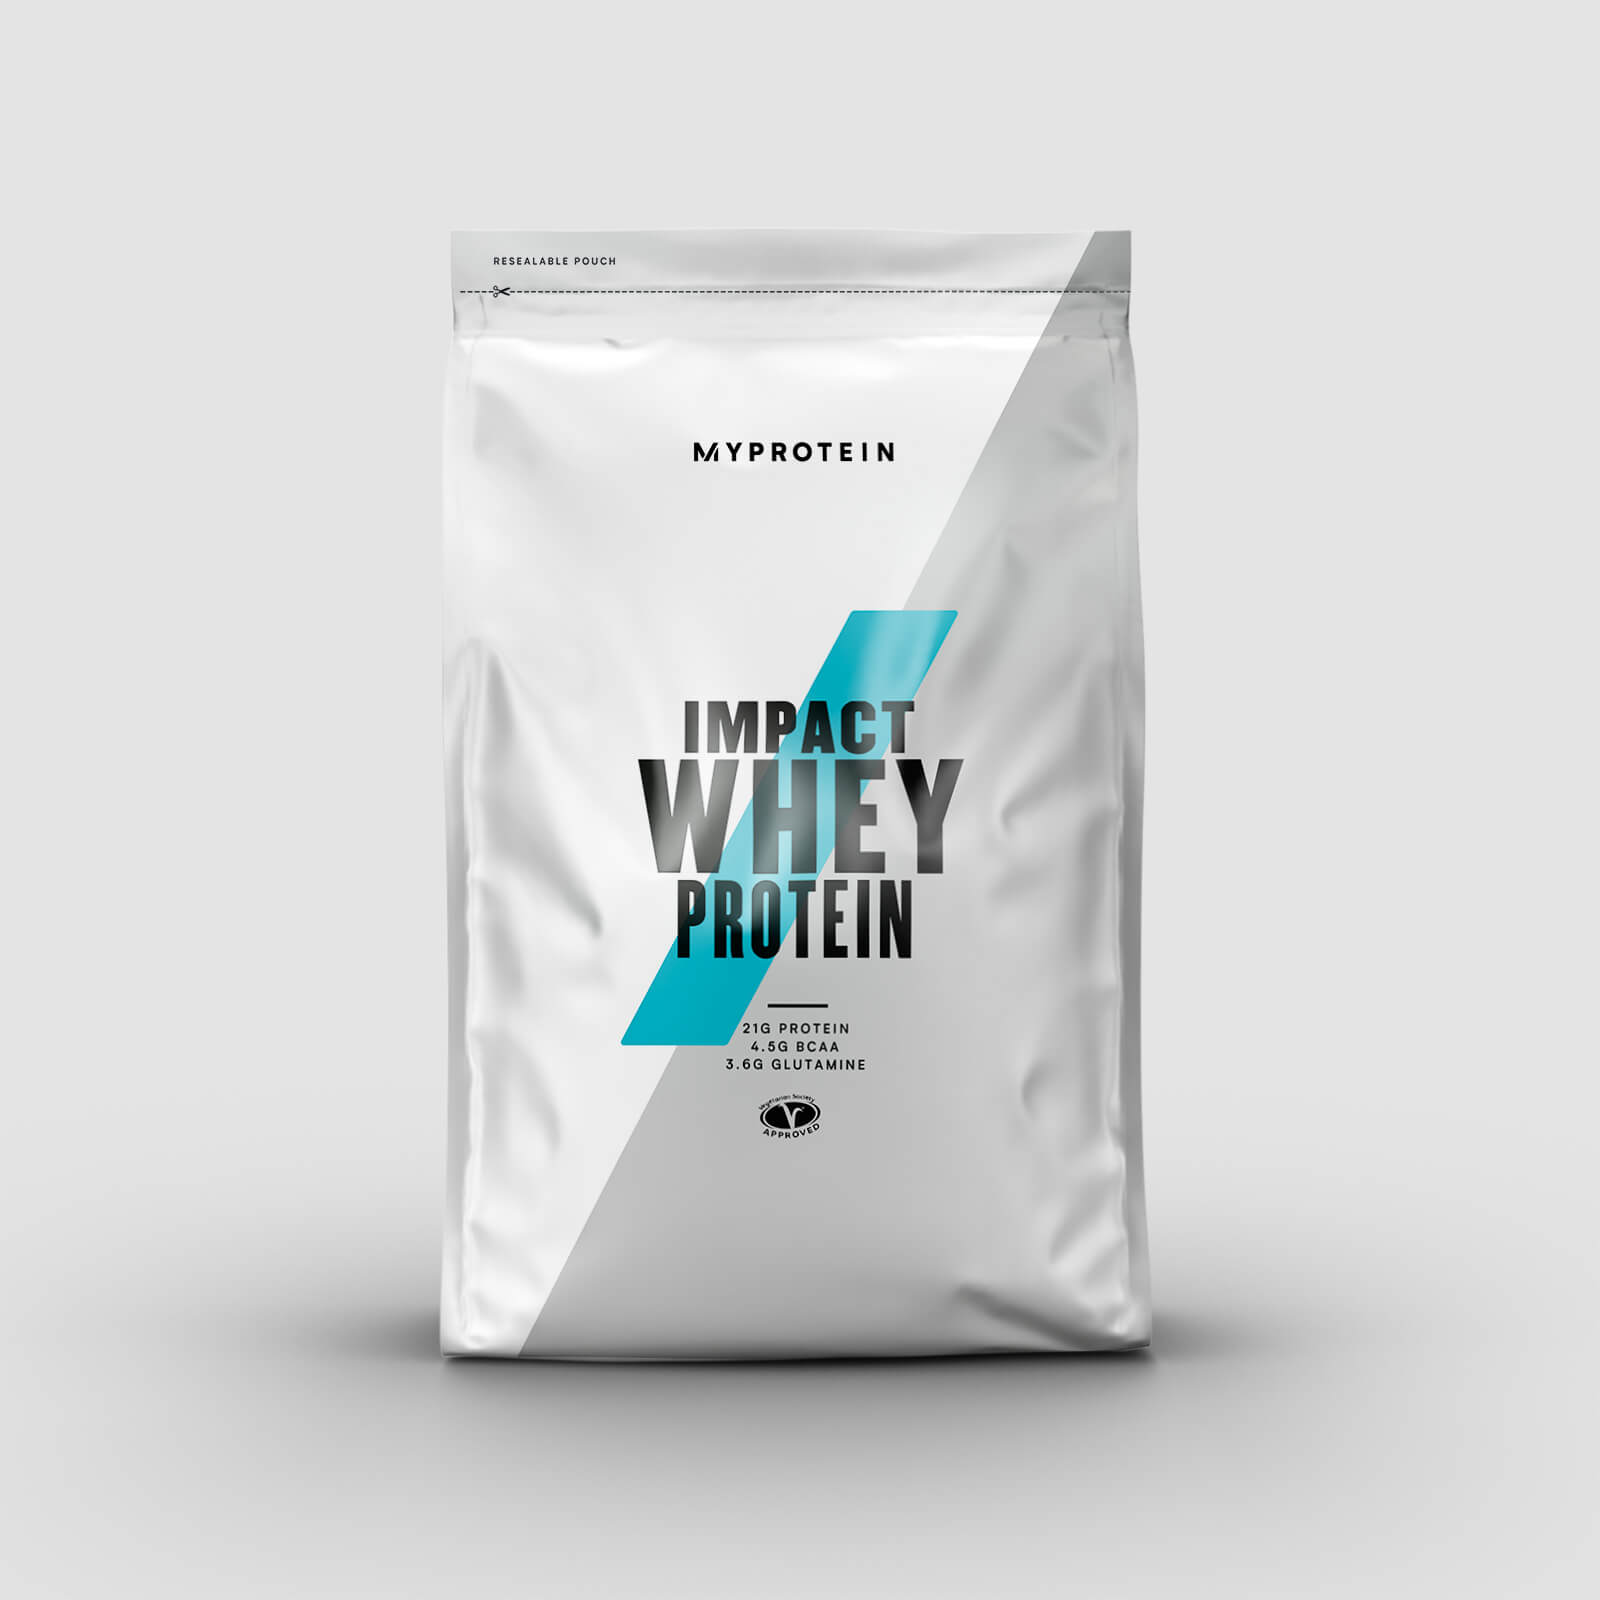 Myprotein Impact Whey Protein 250g (prøve) - 250g - Chokolade Smooth